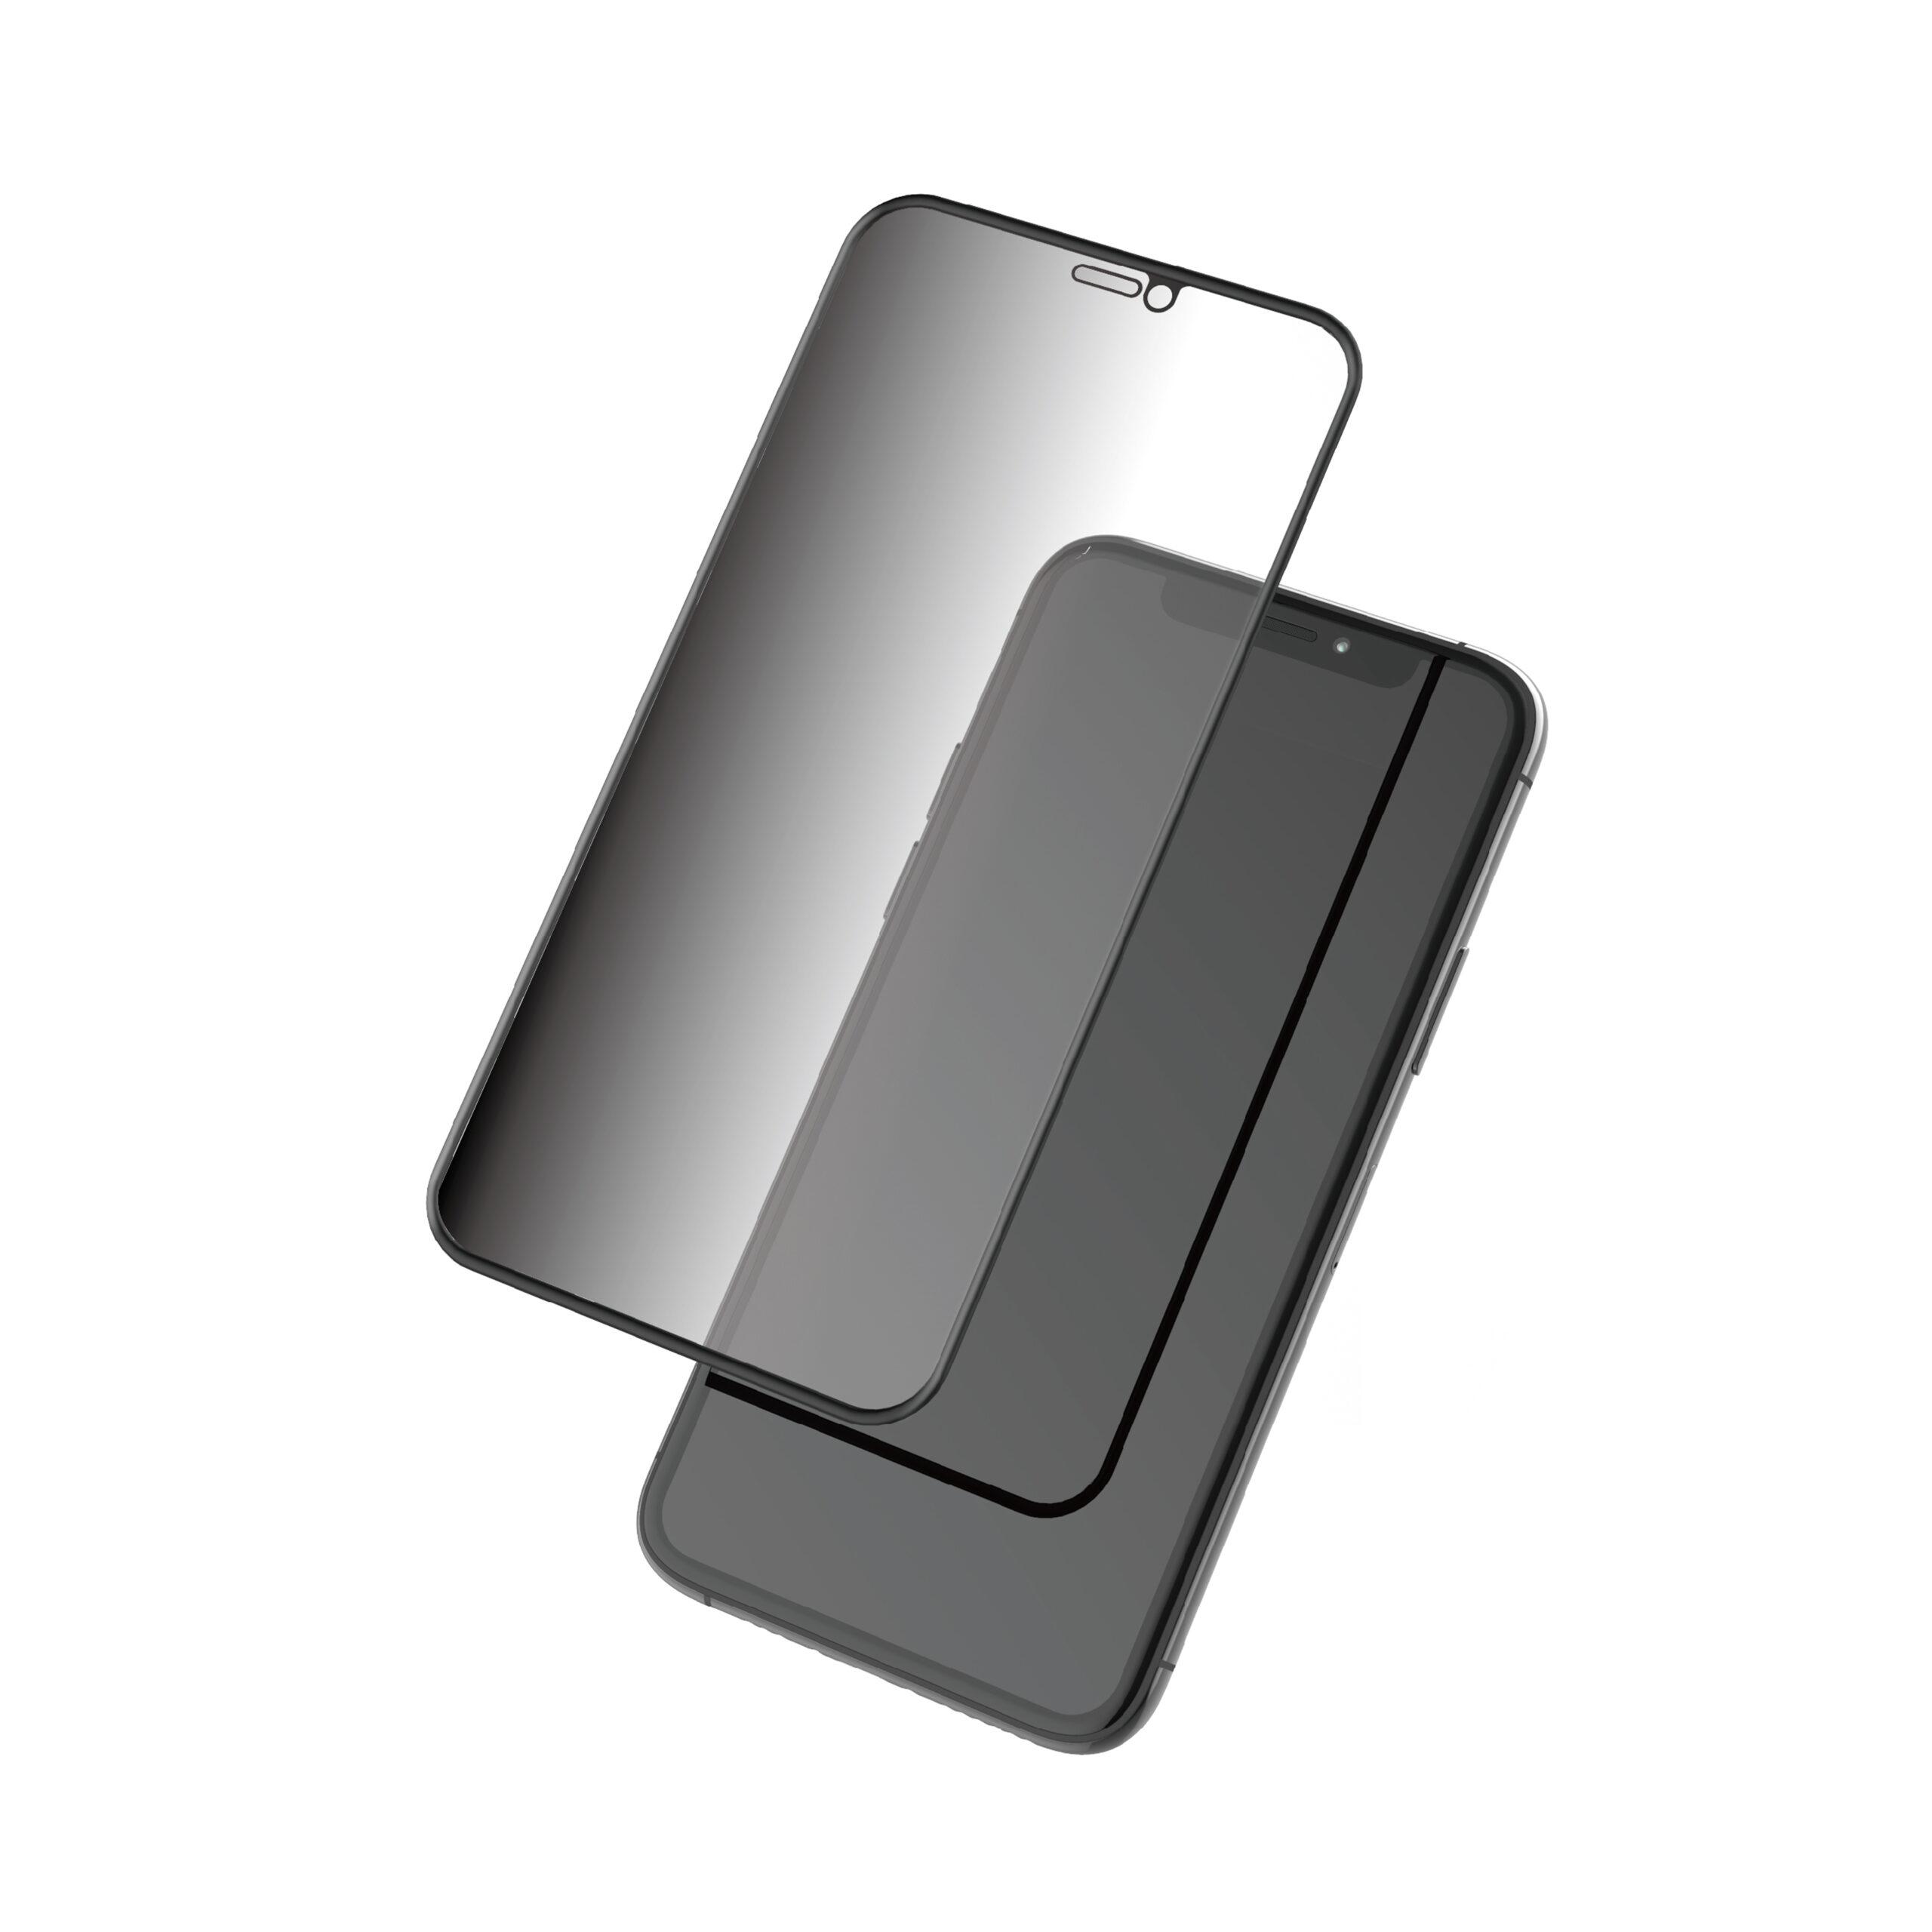 شاشة حماية للخصوصية اسود 3D Silicone Privacy Glass Screen Protector for iPhone 11 من Green